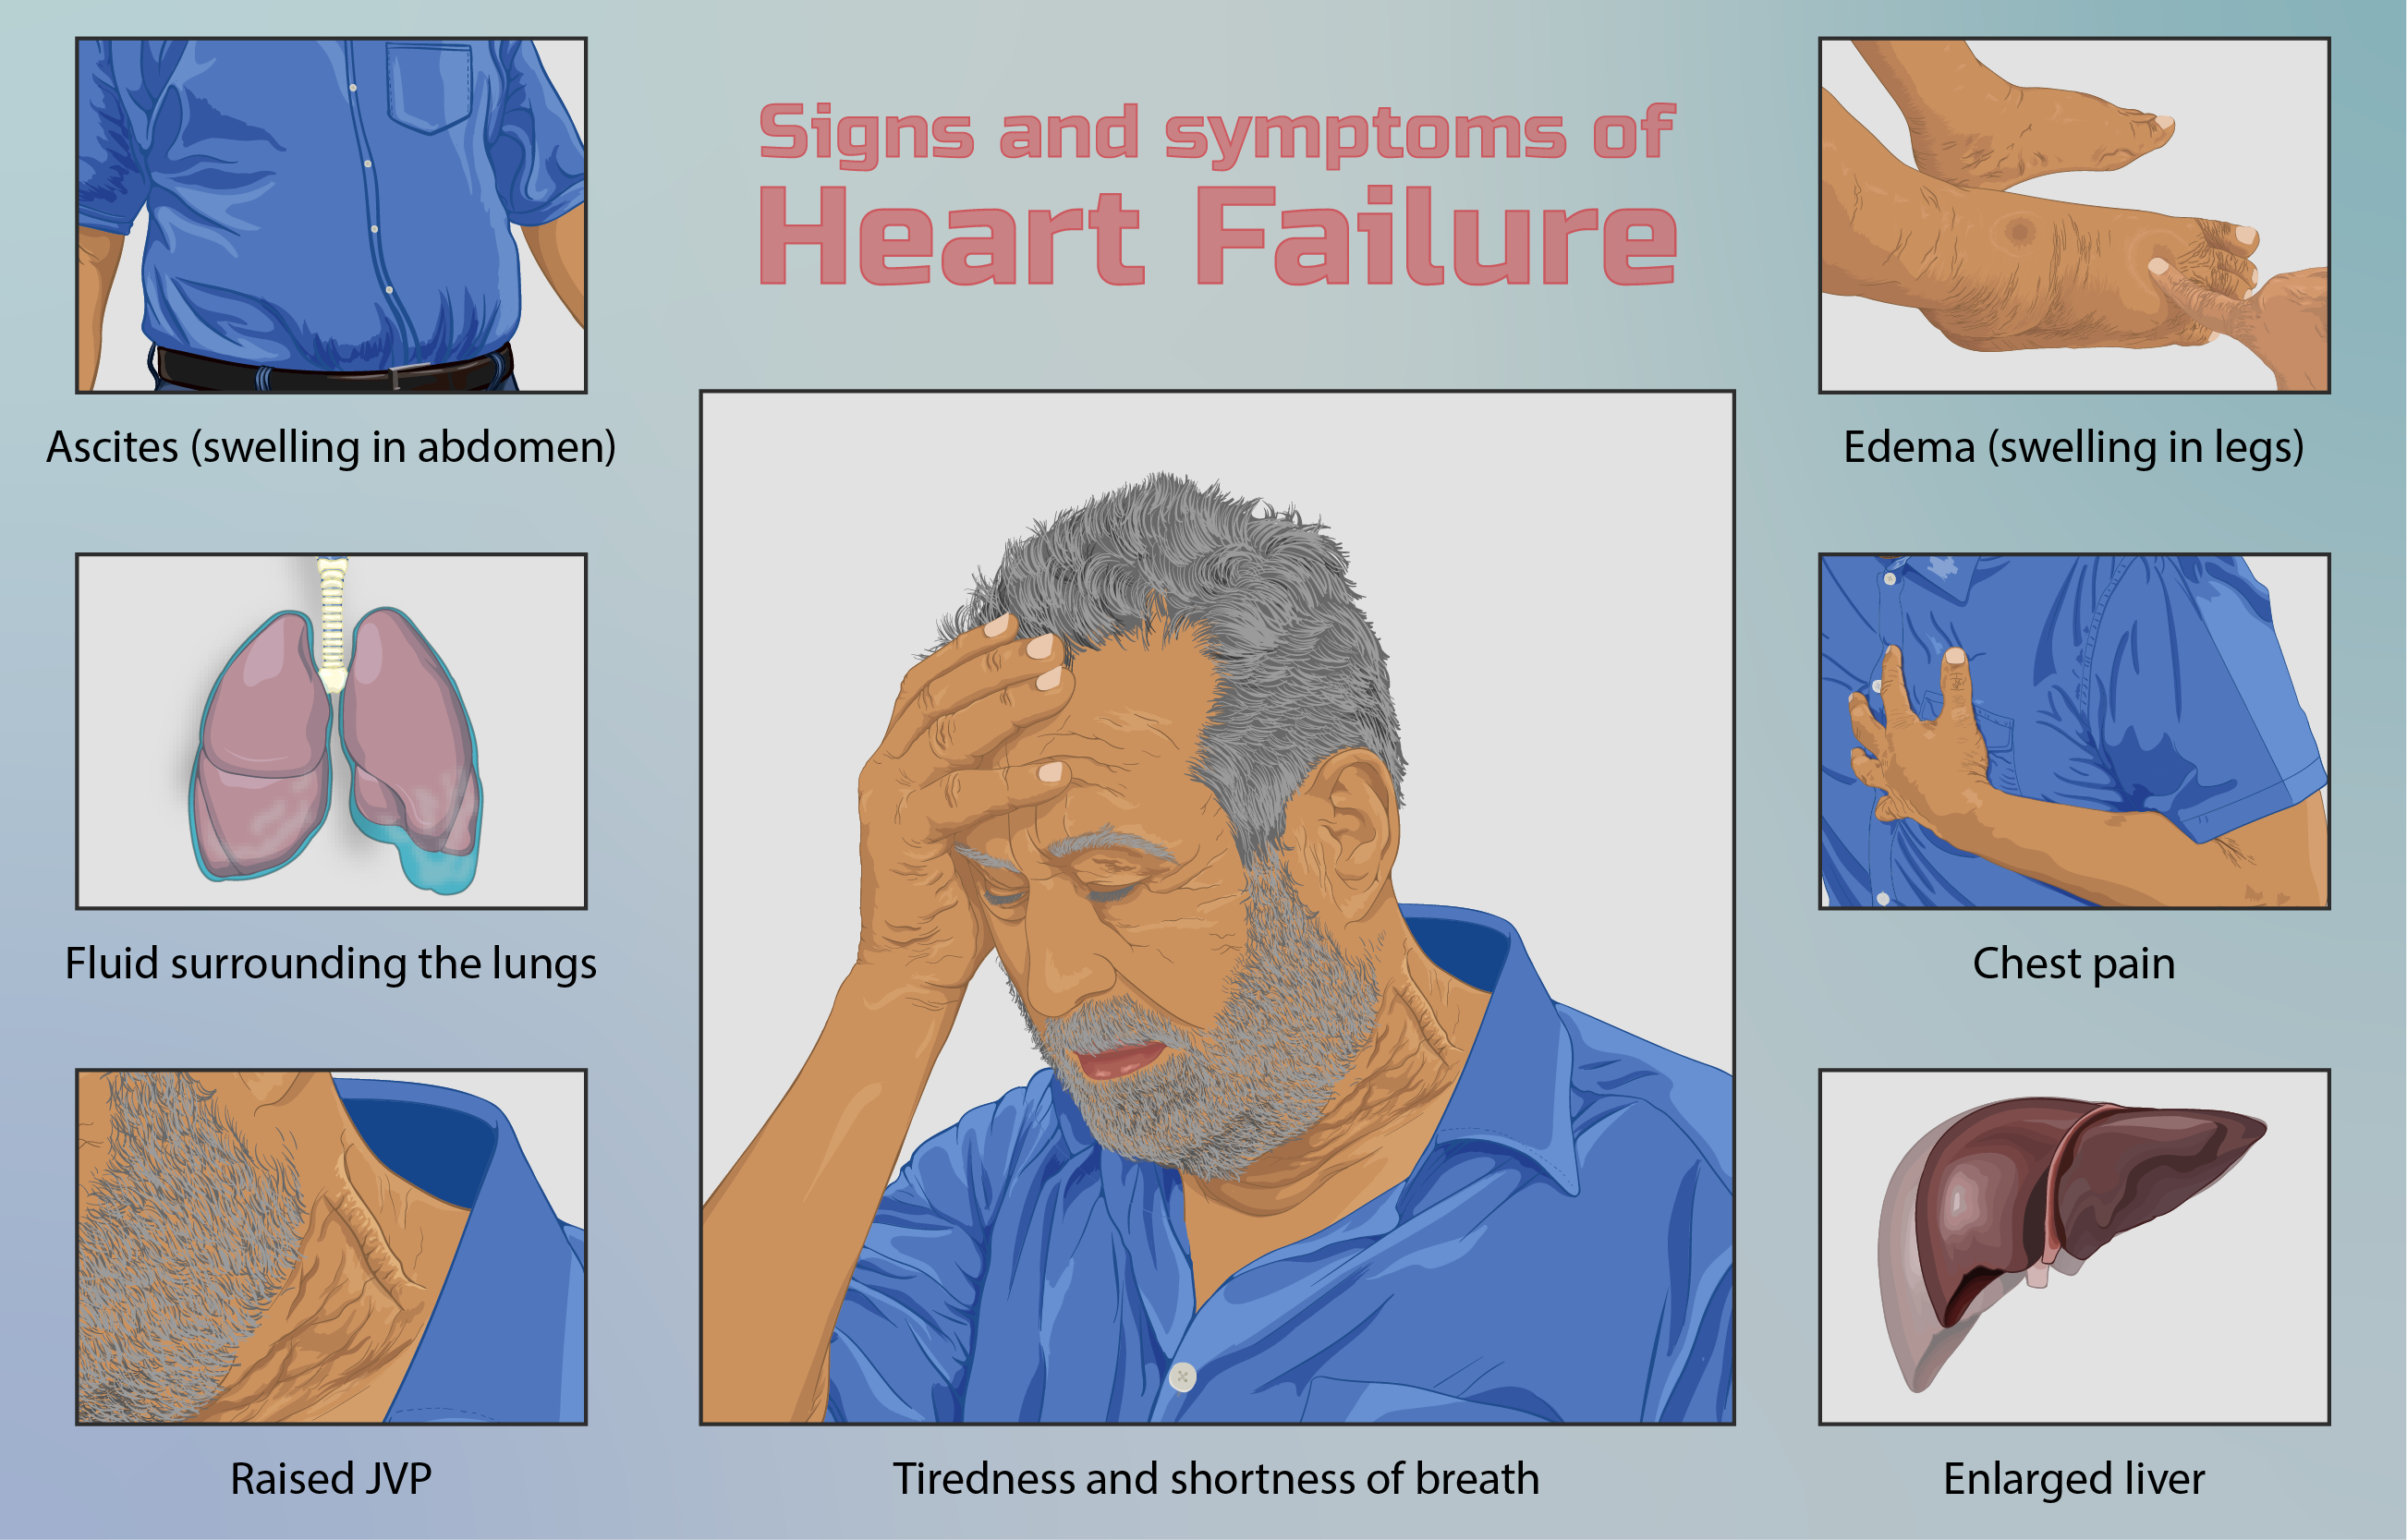 Symptoms of a heart failure